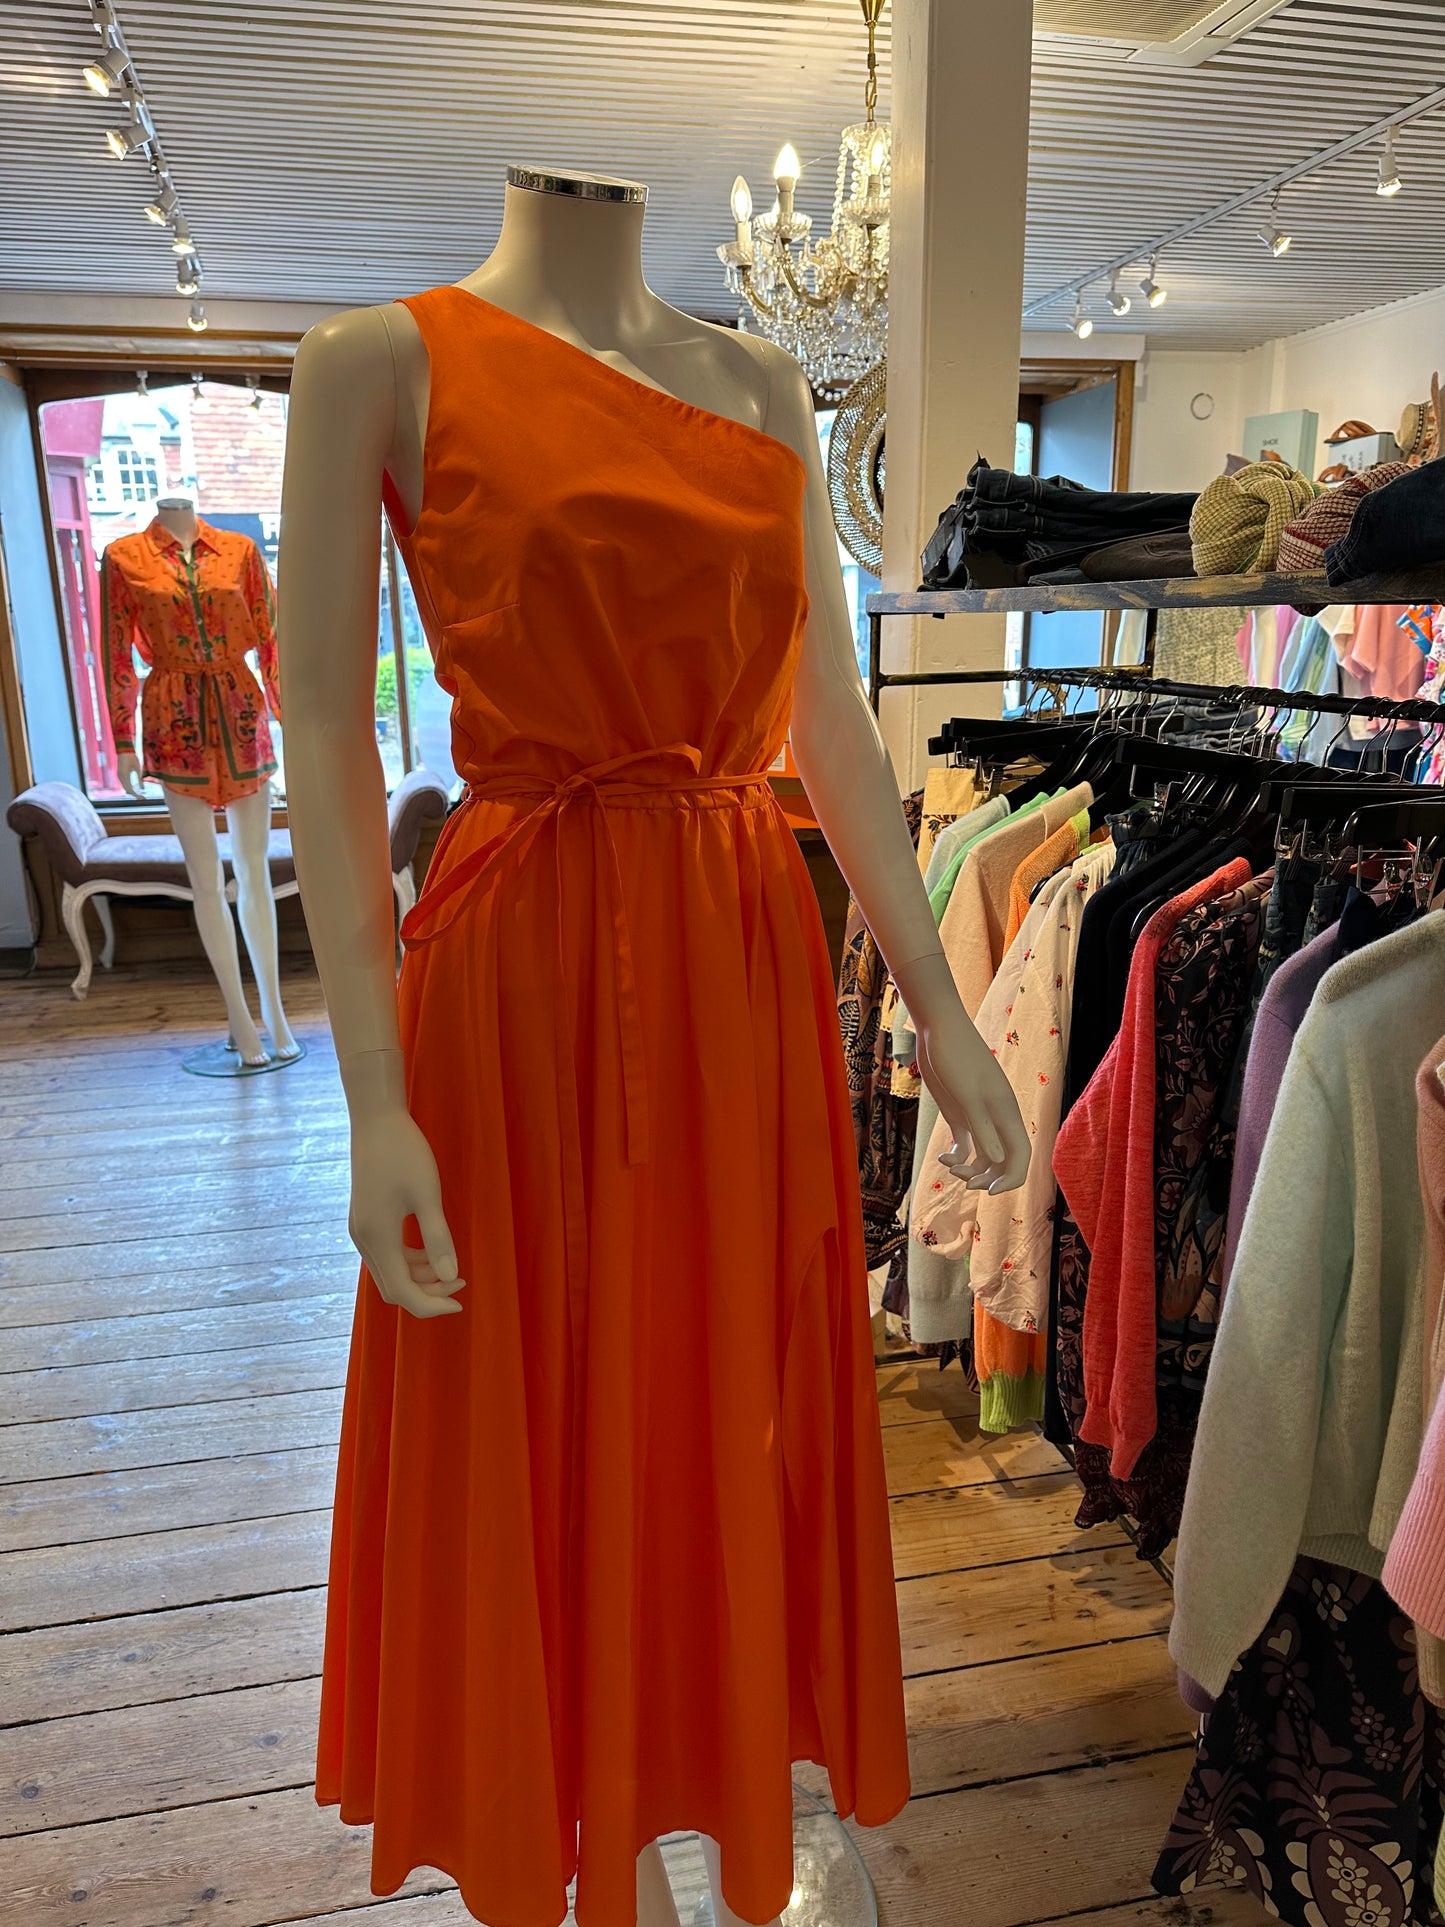 Lapislazzuli Dress in Orange by Lavi